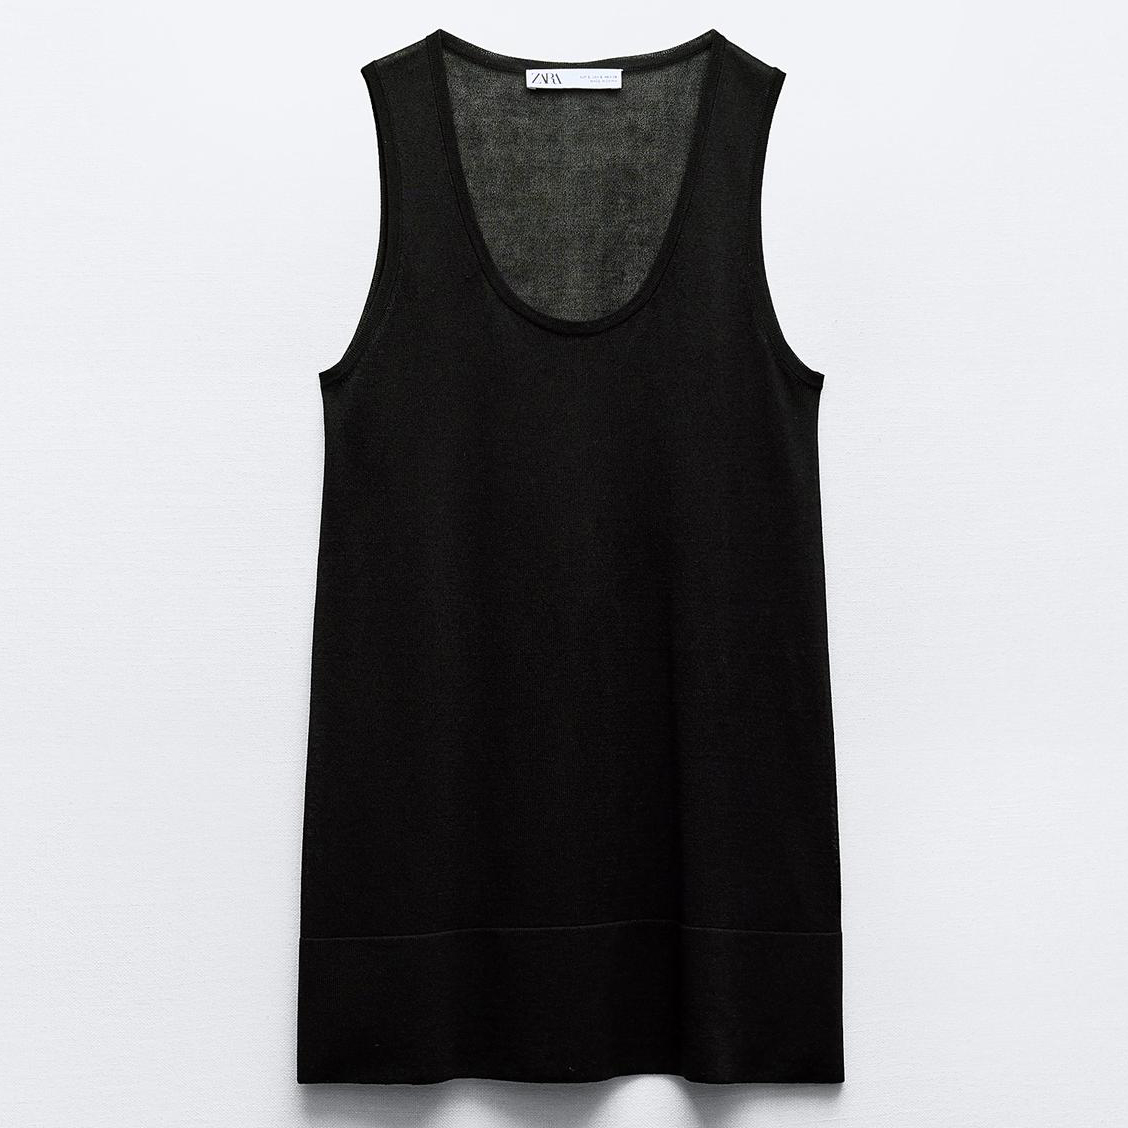 Топ Zara Sleeveless Knit Semi-sheer, черный цена и фото